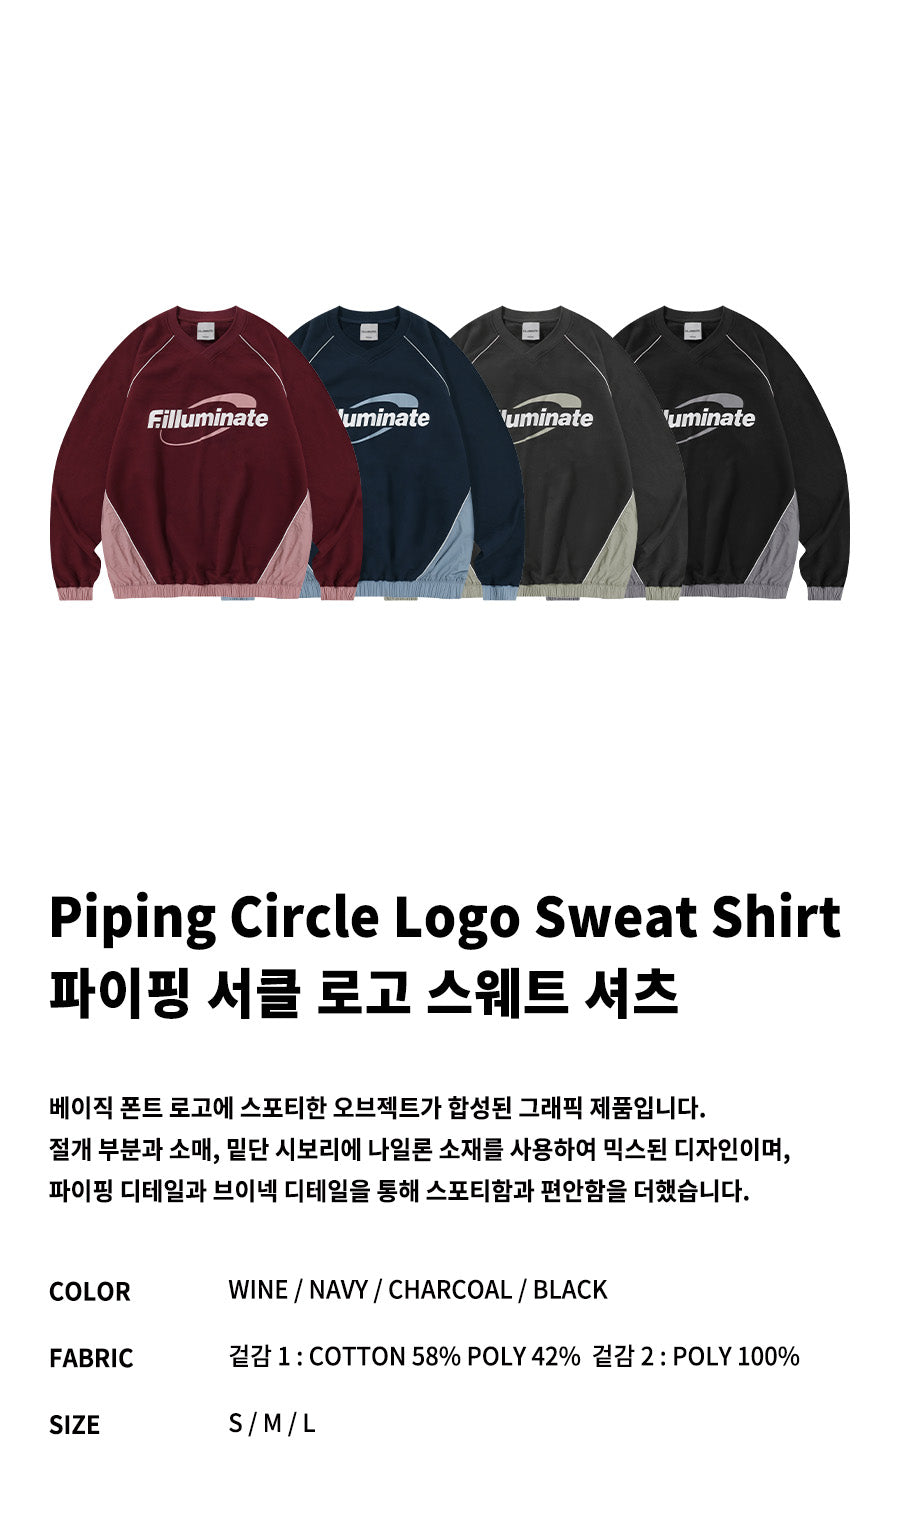 Piping Circle Logo Sweat Shirt-Wine